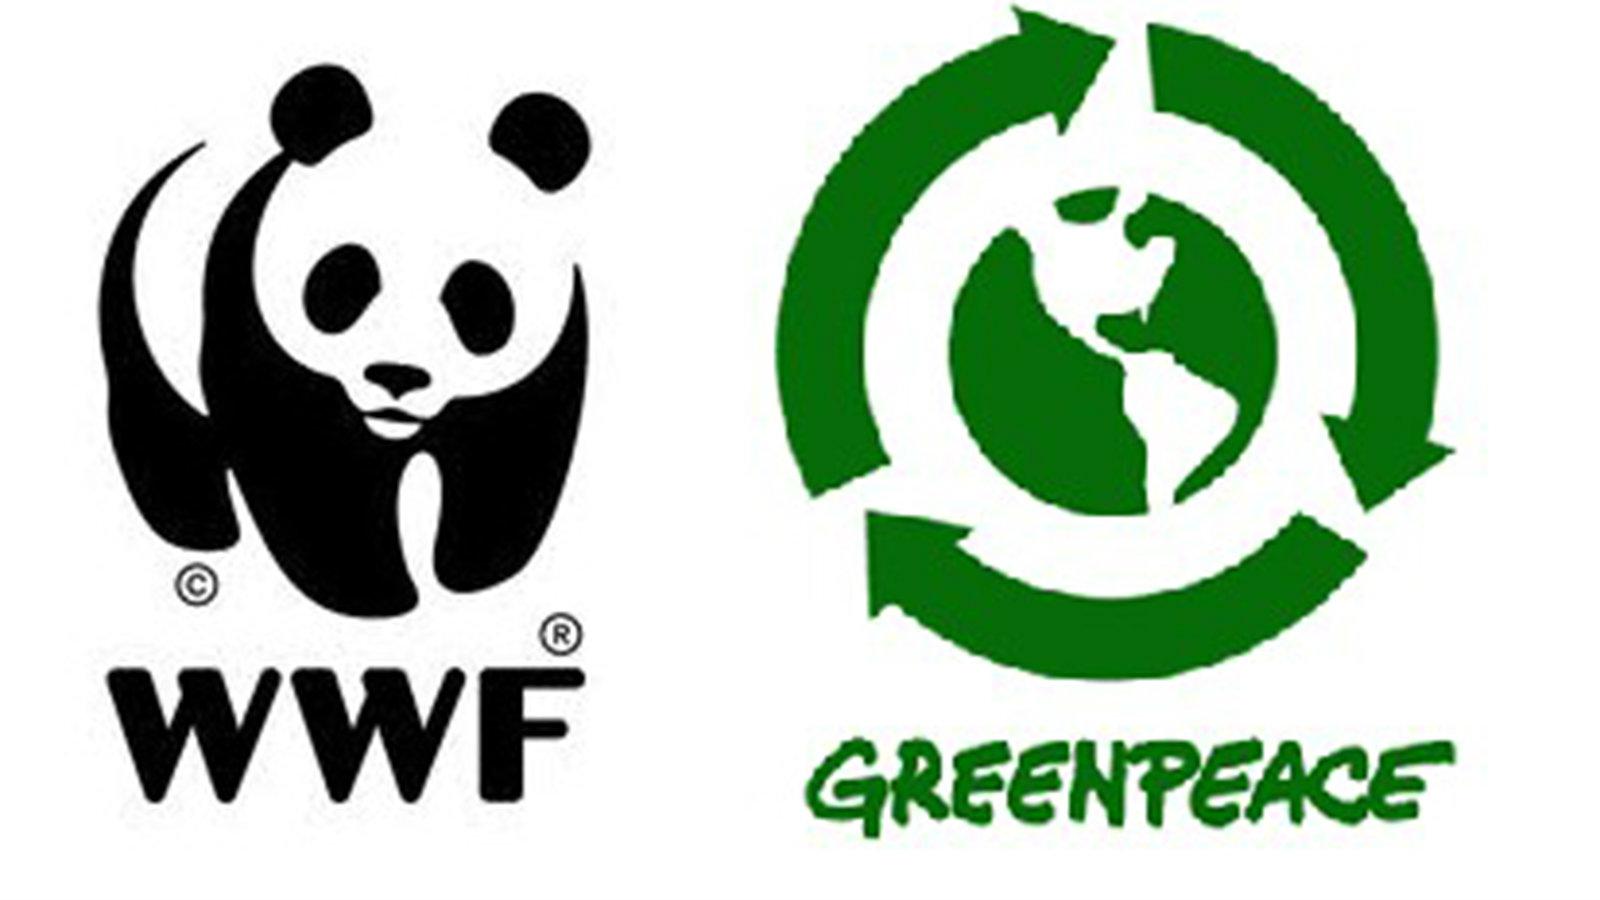 Greenpeace organization